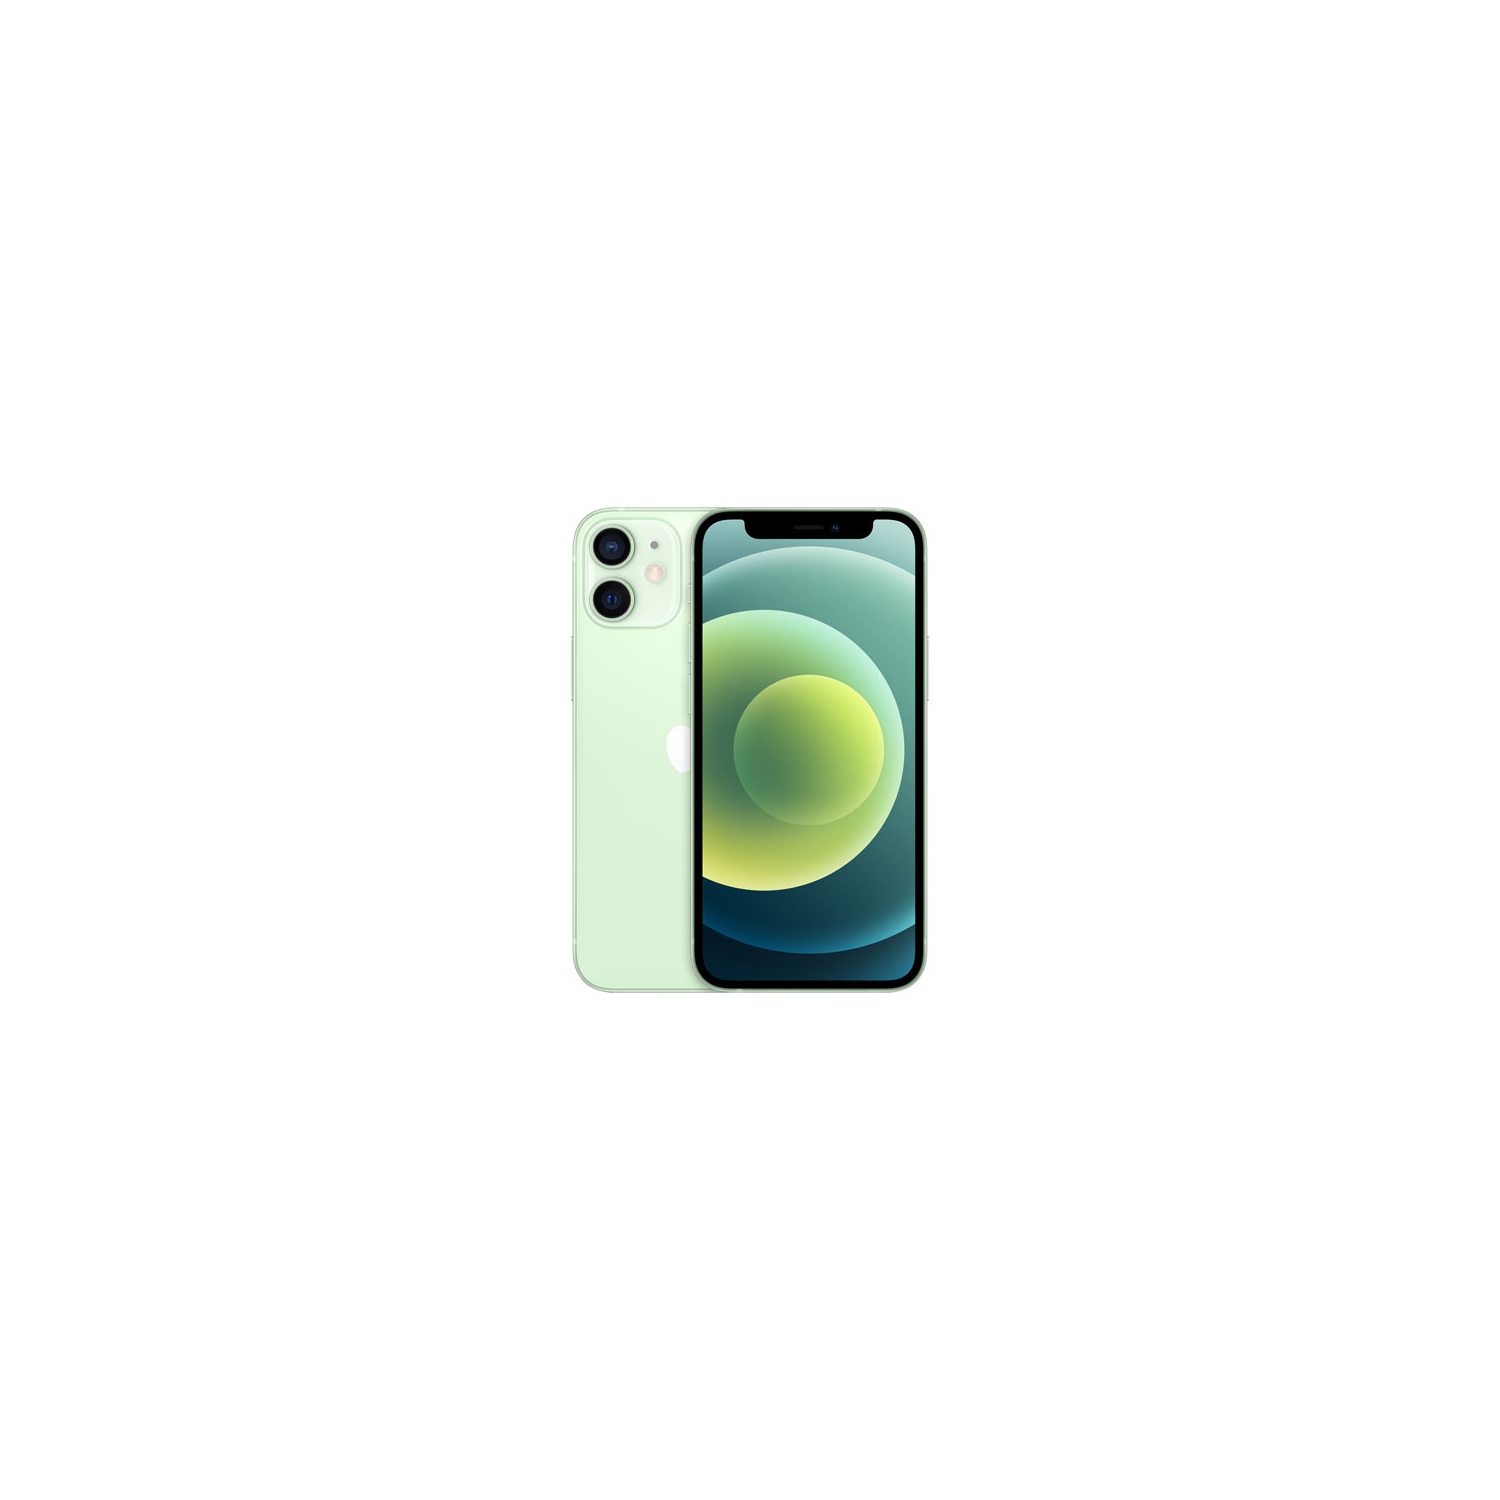 Refurbished (Good) - Apple iPhone 12 mini 64GB Smartphone - Green - Unlocked